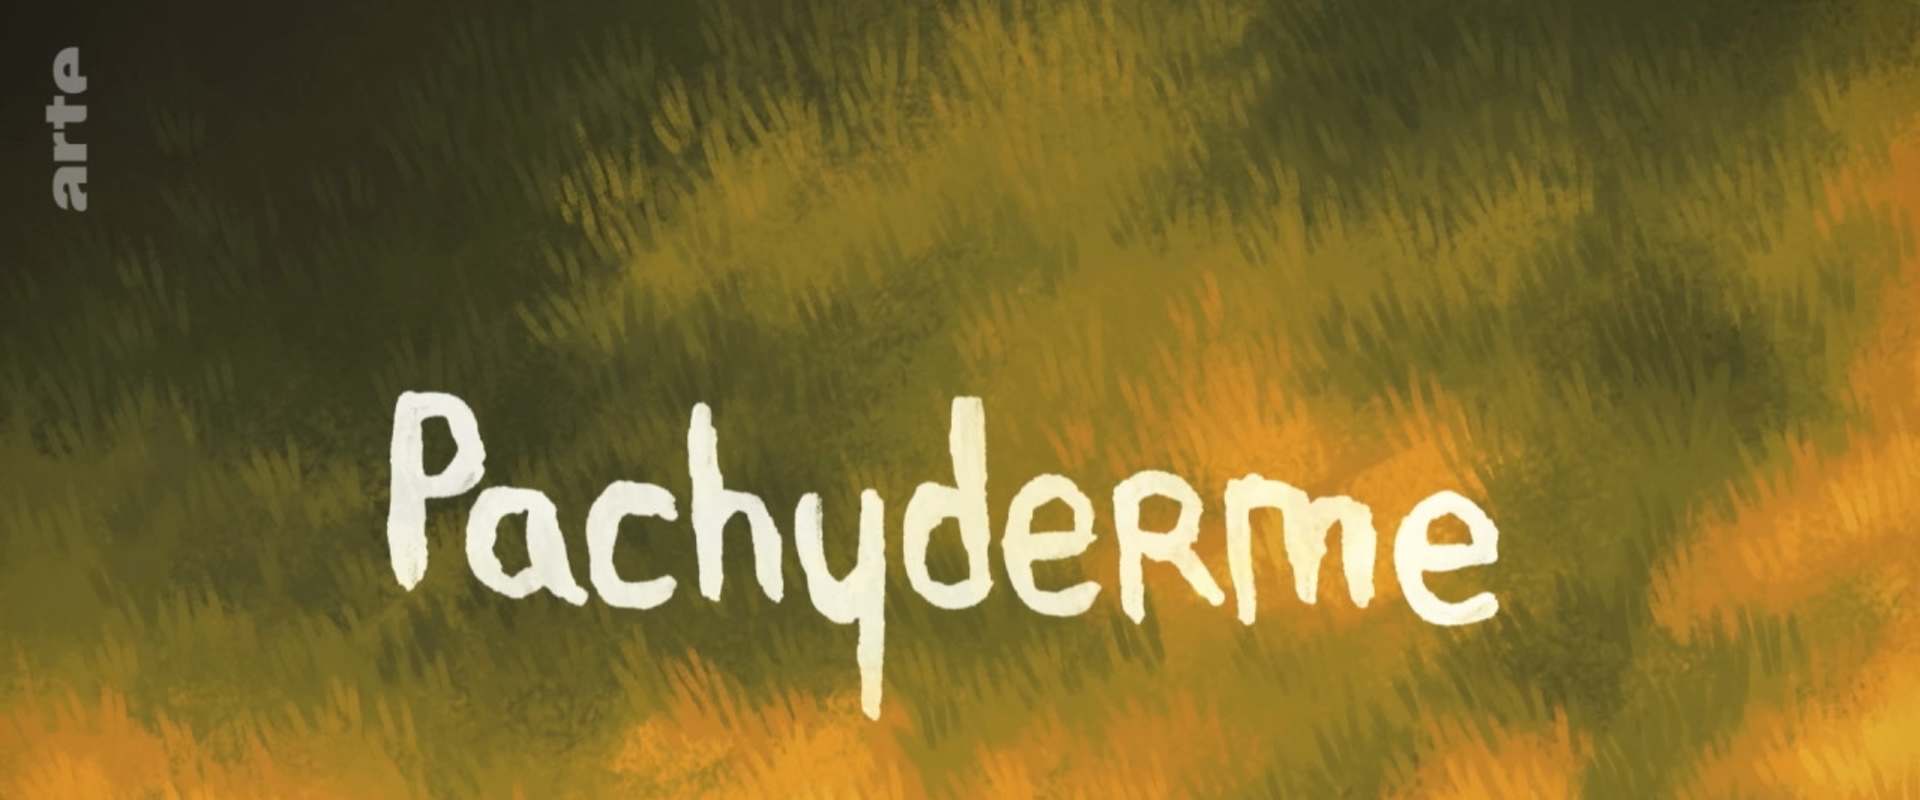 Pachyderm background 2